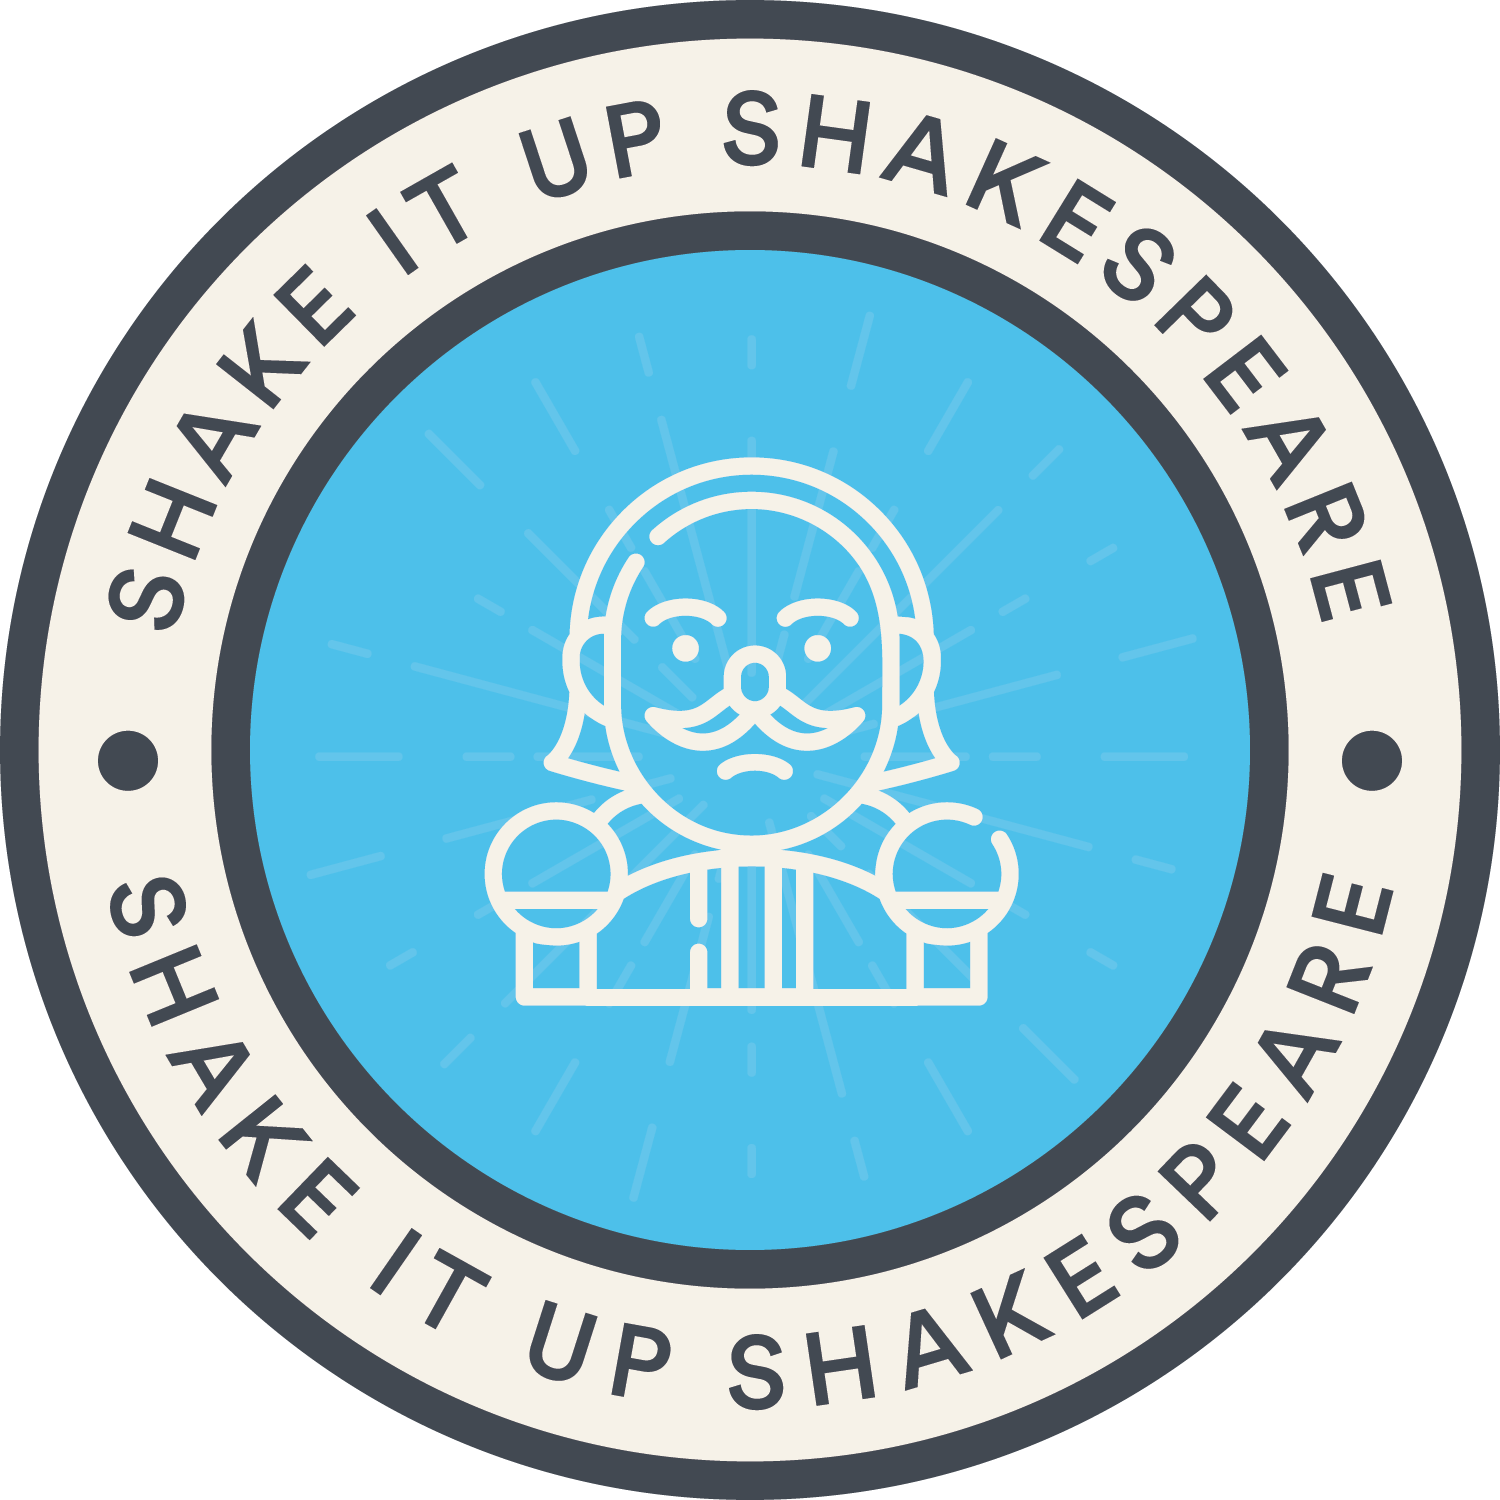 Shake it up Shakespeare